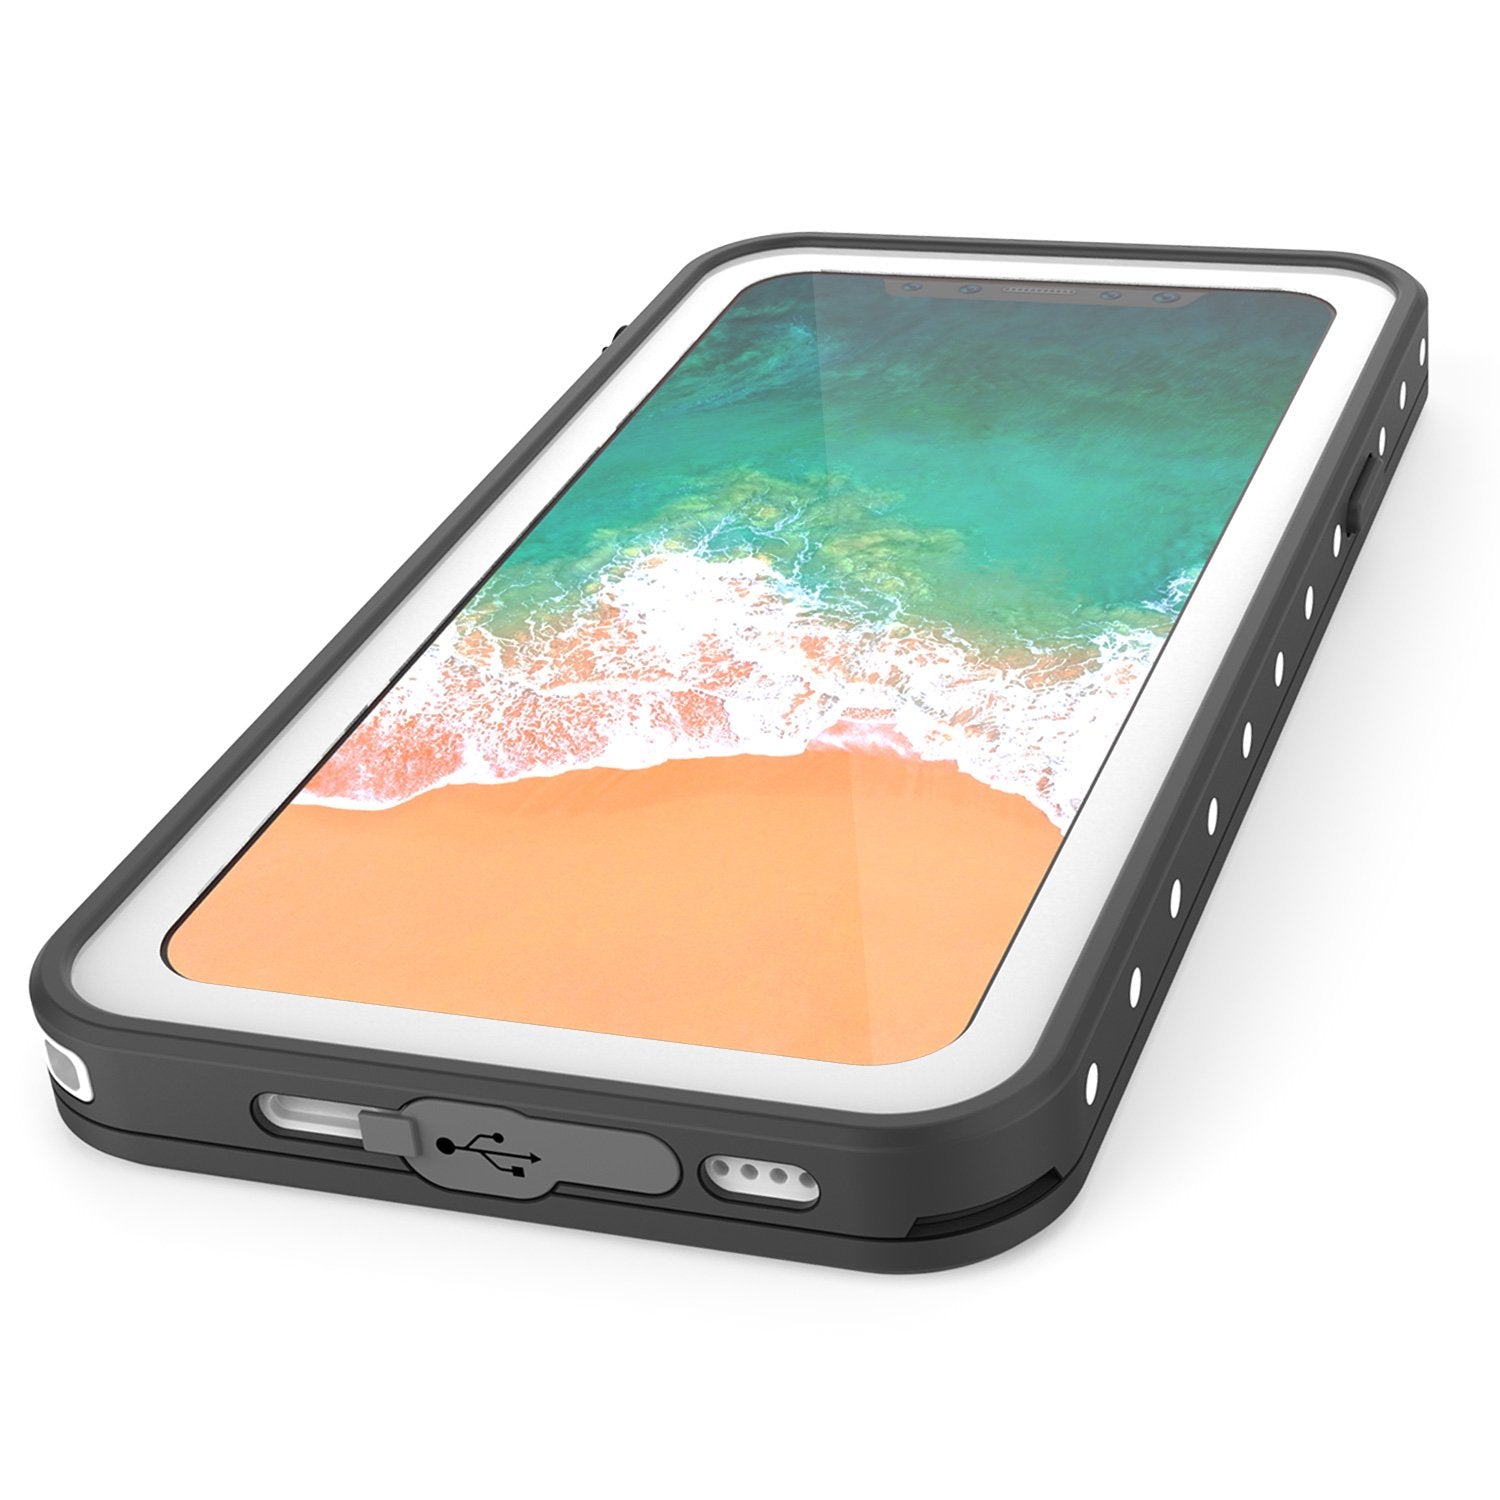 iiPhone X Plus Waterproof Case, Punkcase StudStar Series Cover [White]